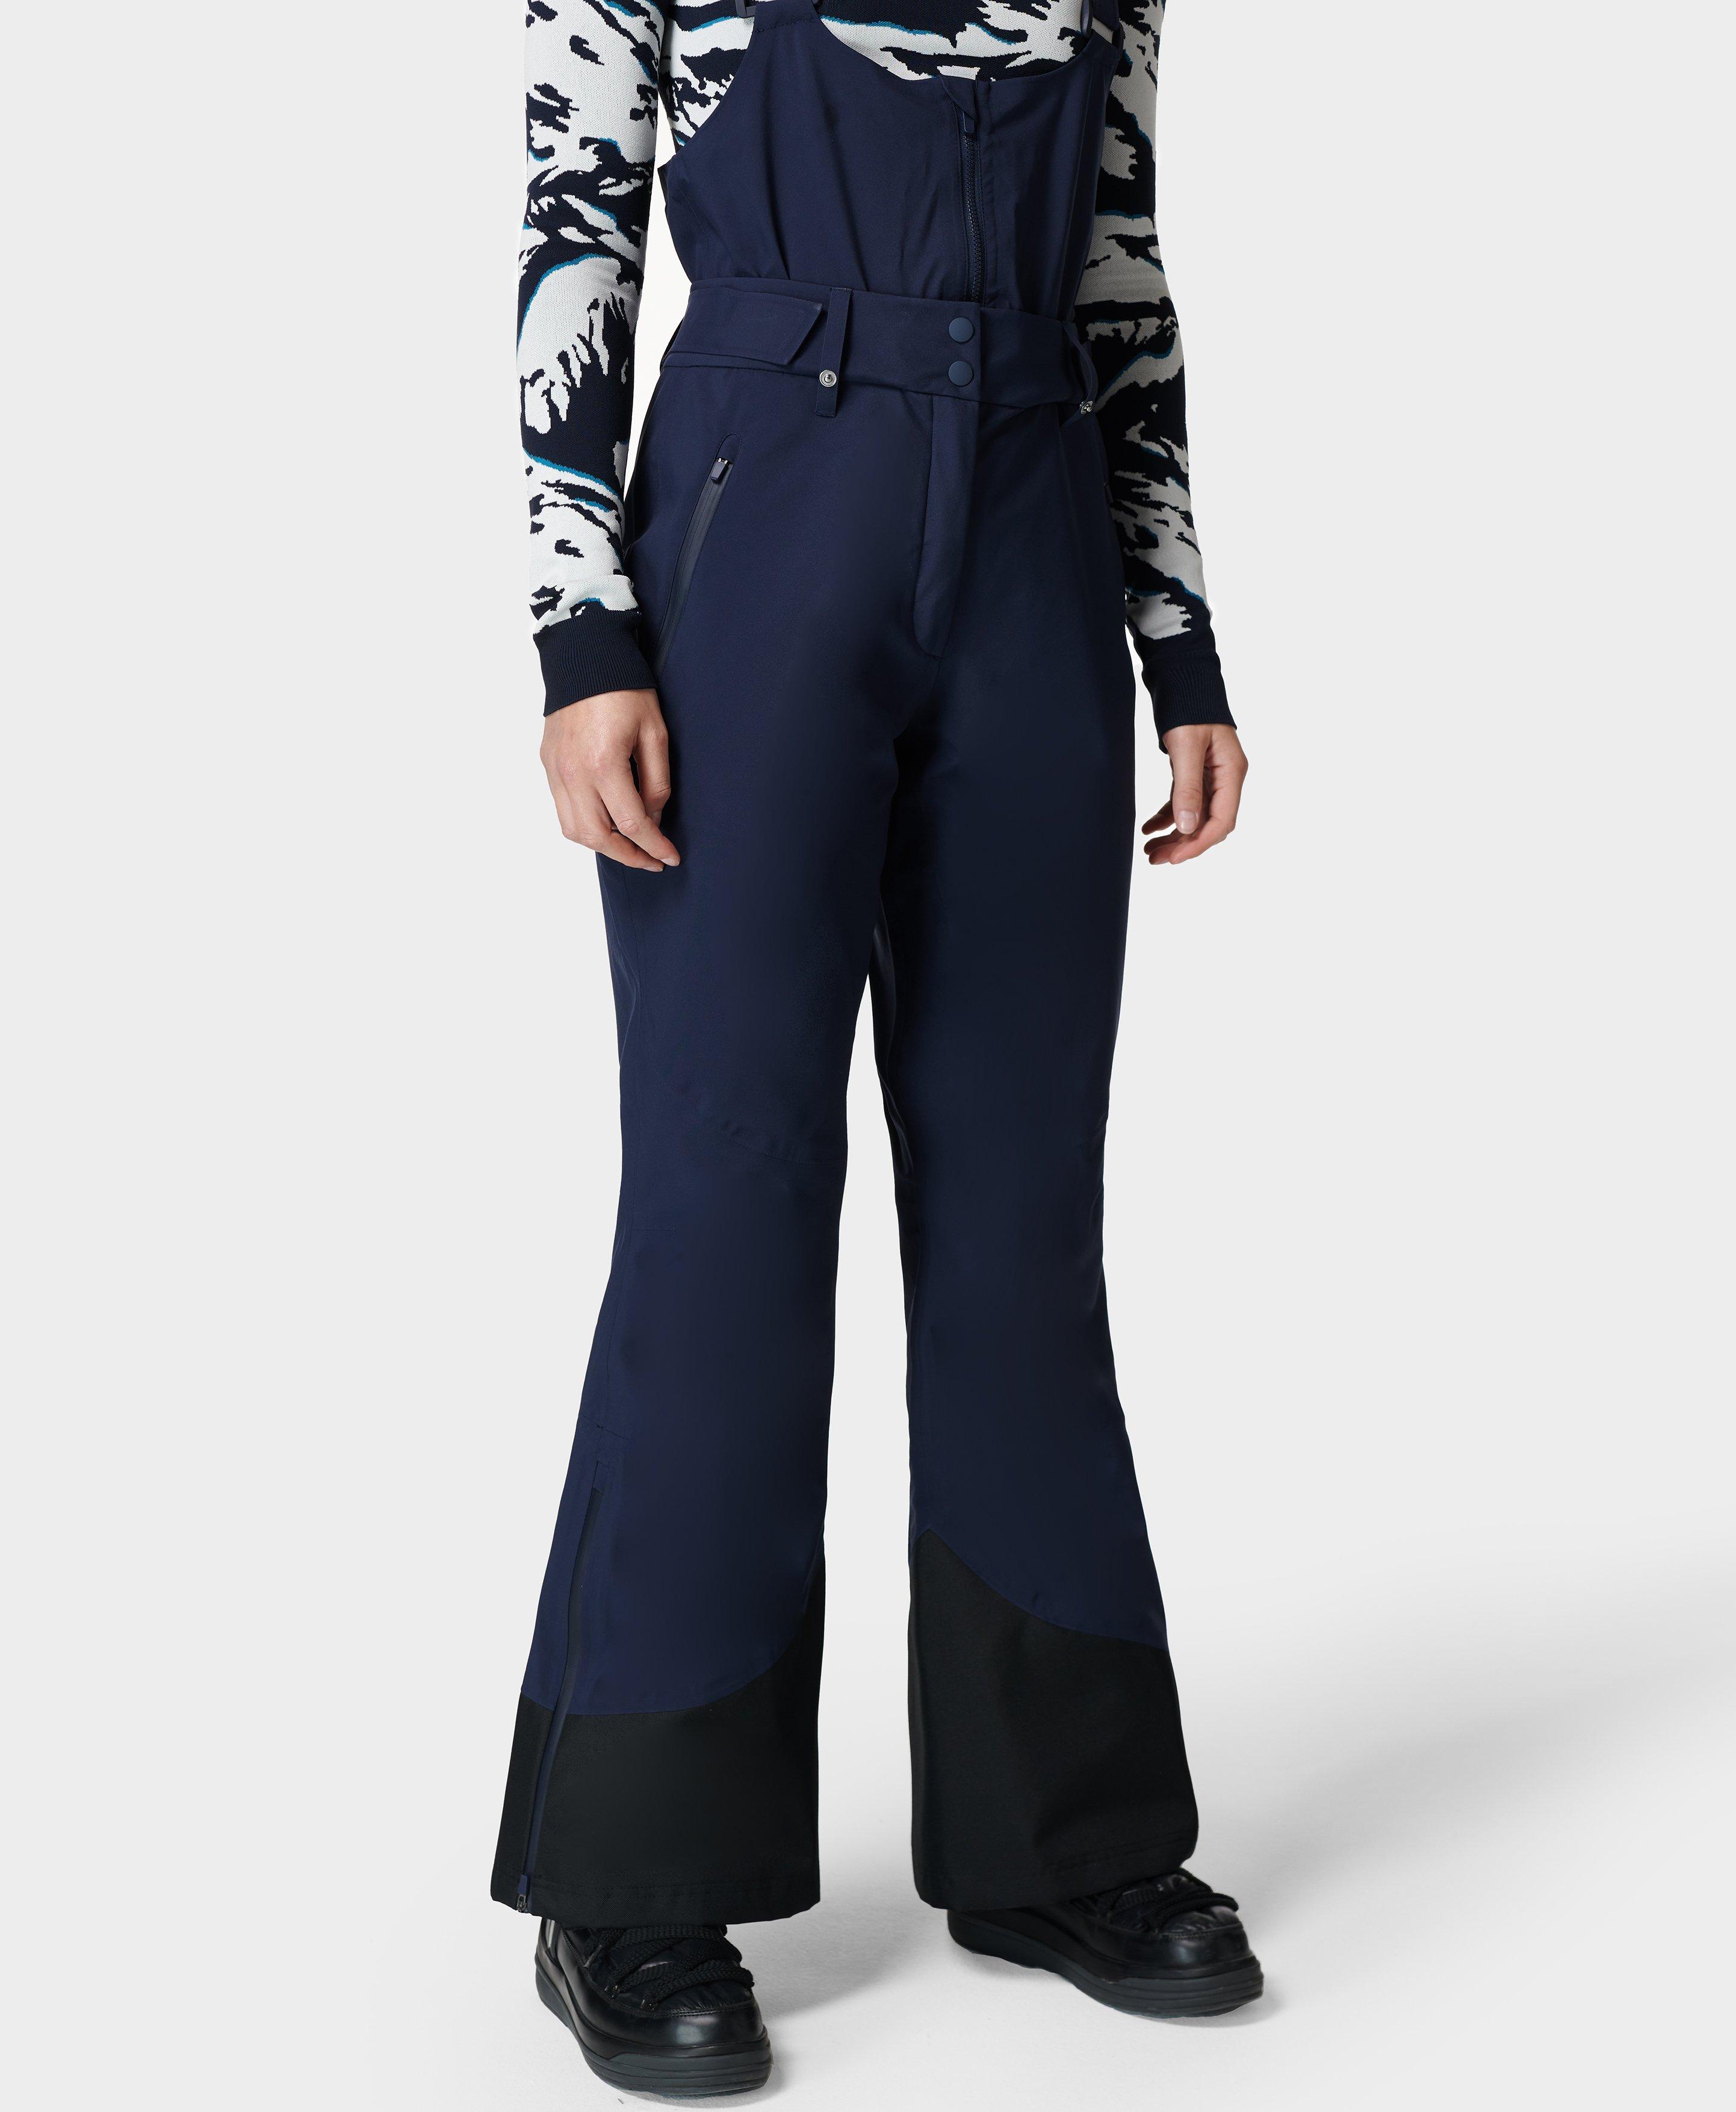 Pro Light Performance Salopette - Navy Blue, Women's Ski Clothes